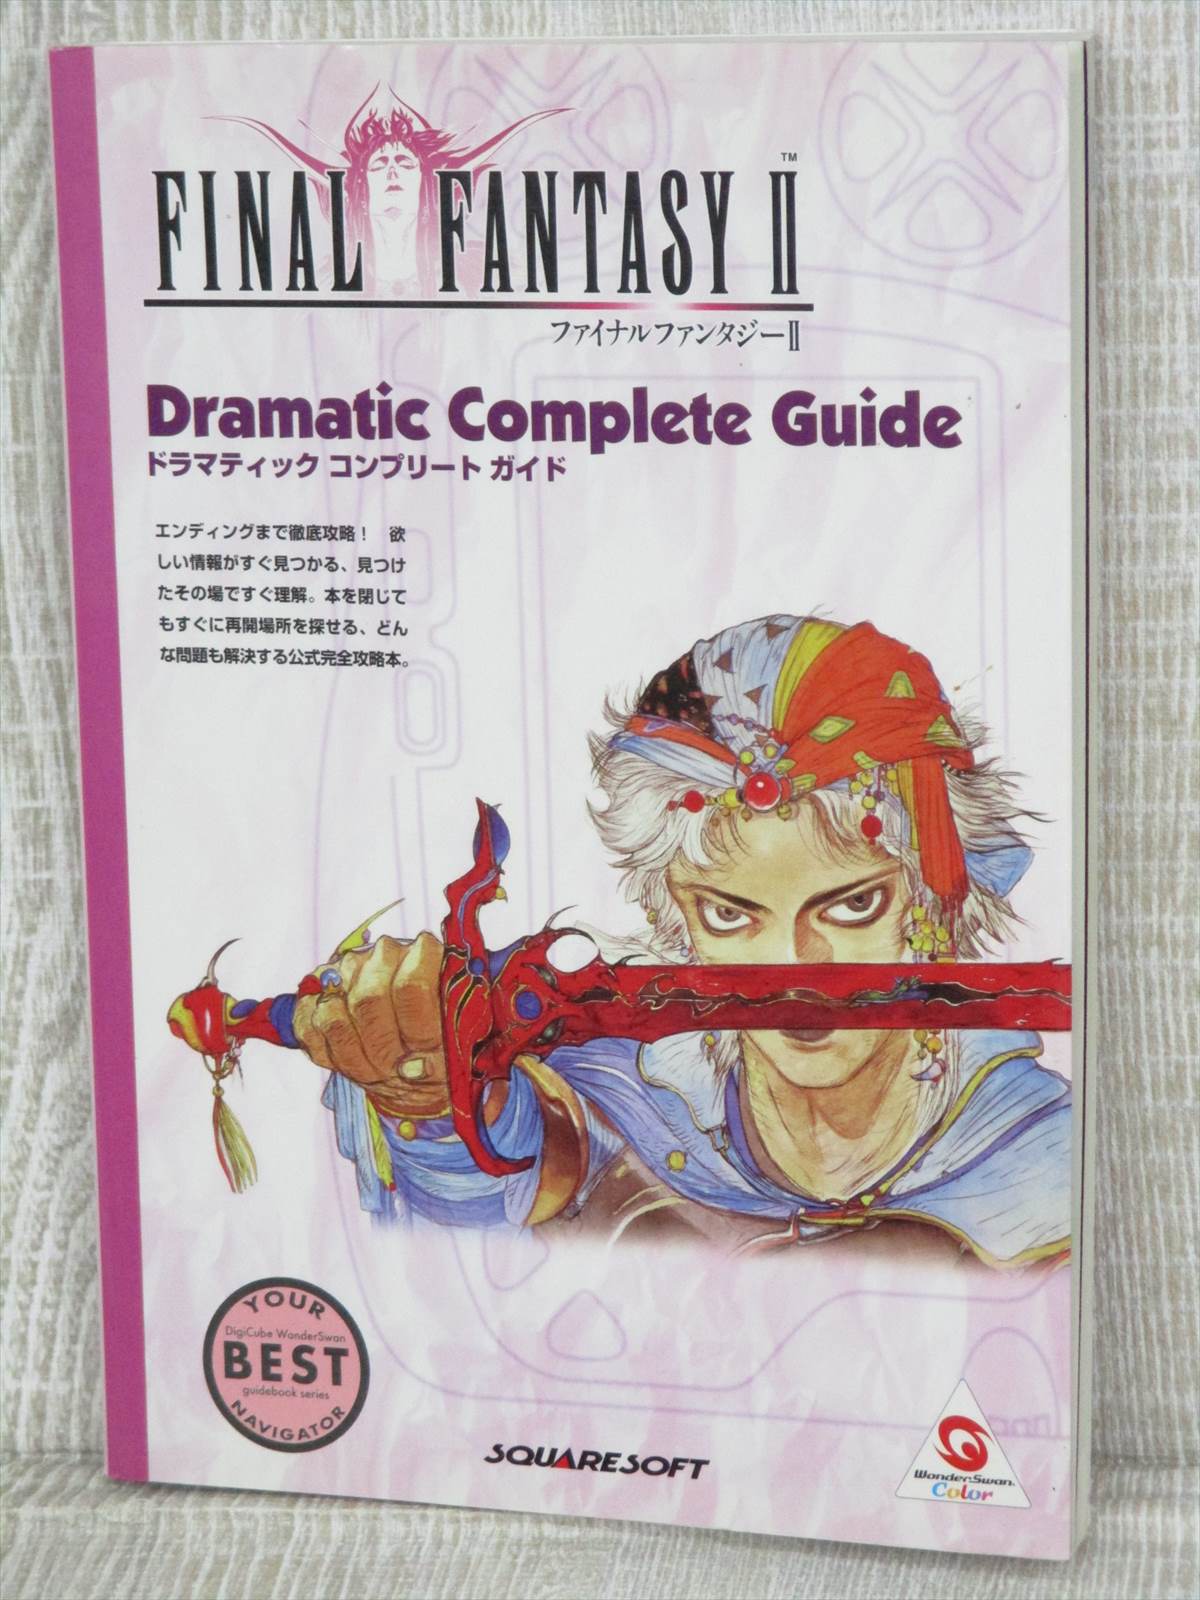 Final Fantasy Ii 2 Dramatic Complete Guide Wonderswan Color Book Dc93 Ebay